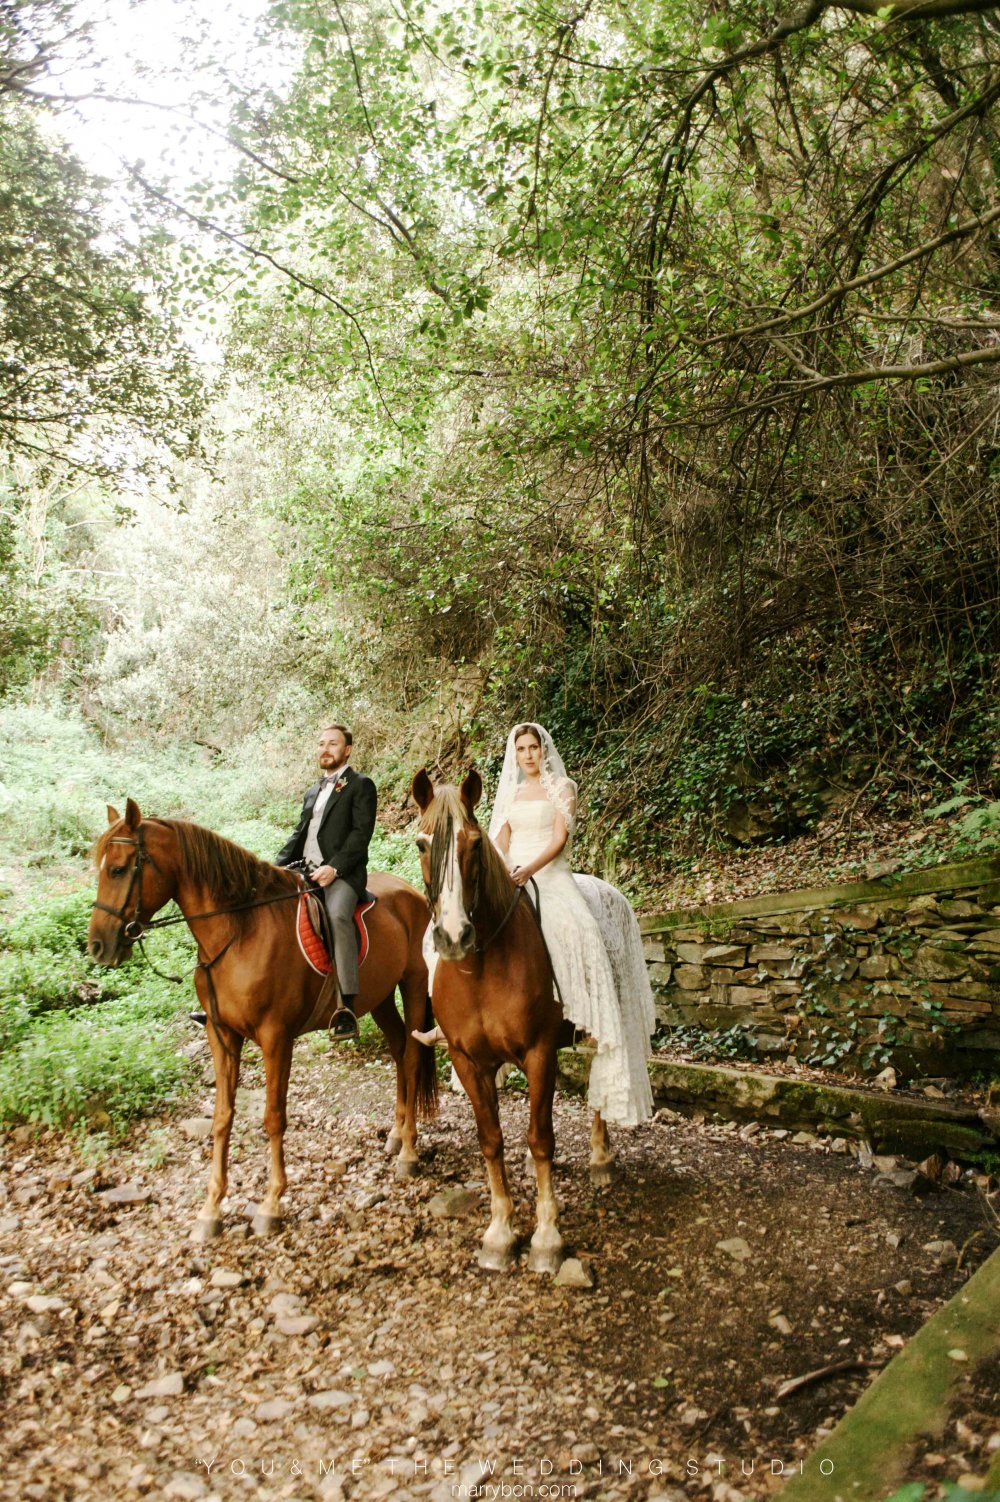 Свадебная церемония в горах, свадьба в Испании